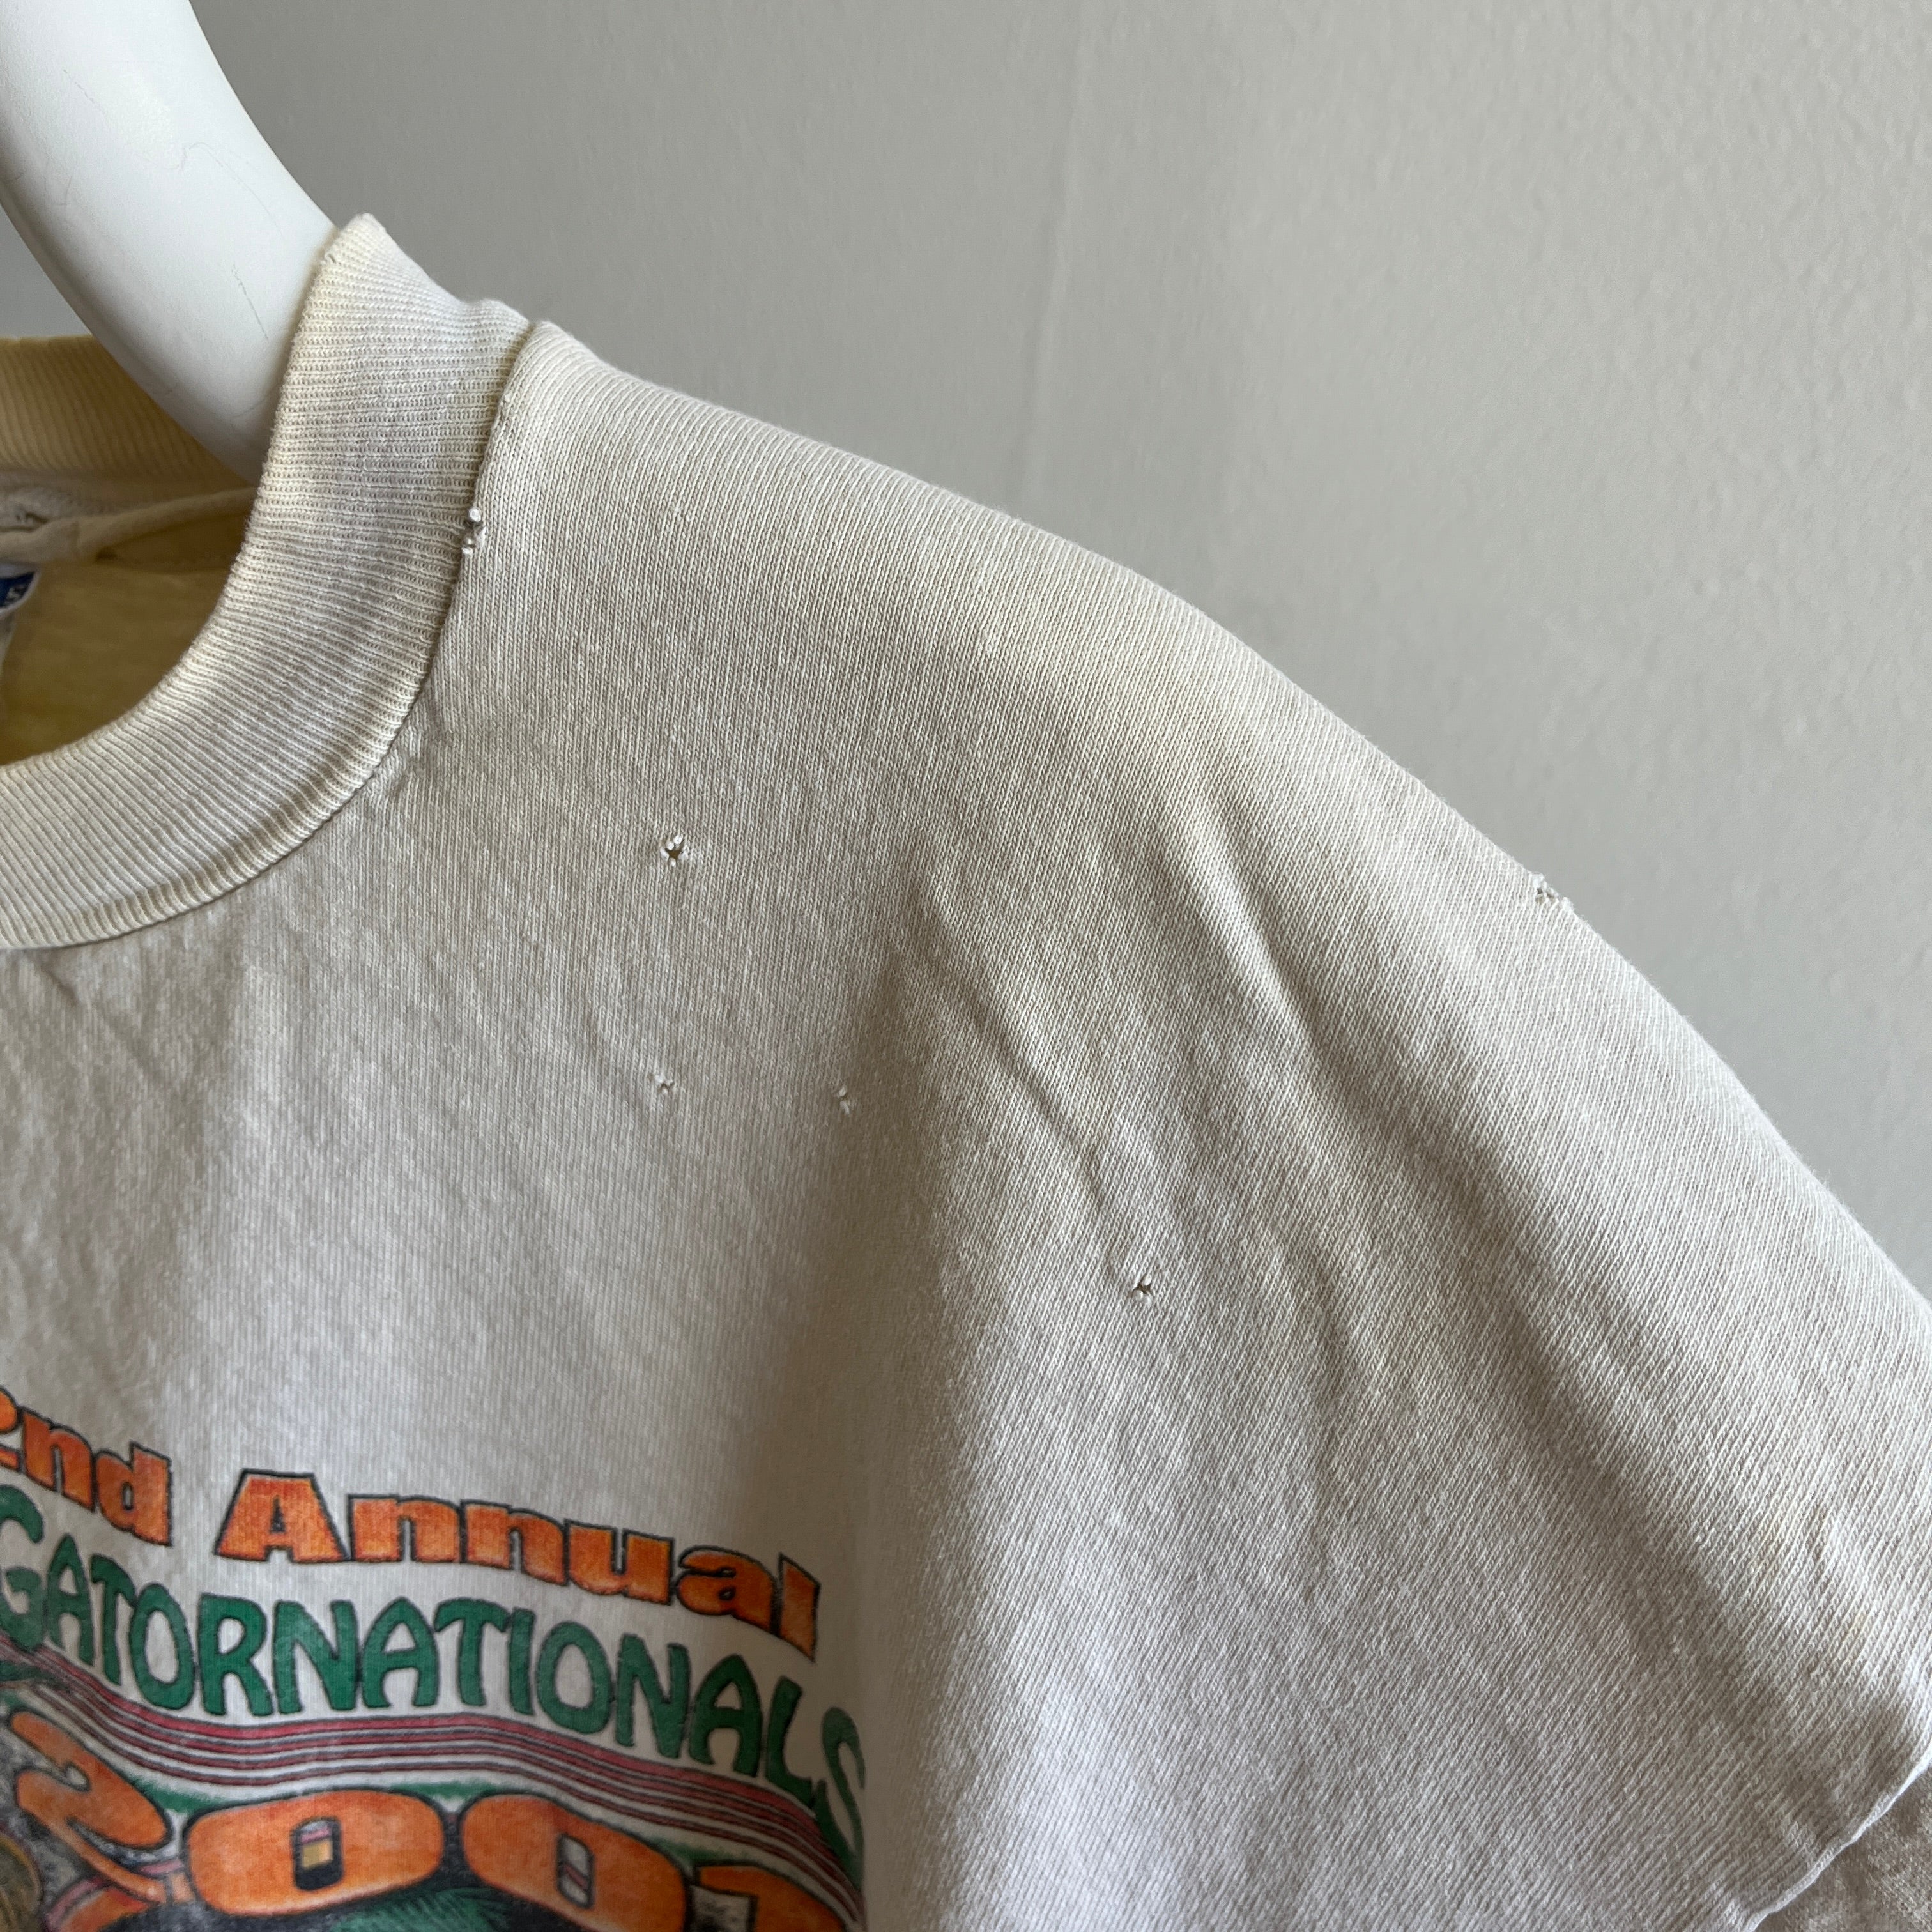 2001 Mac Tools Gatornationals NHRA T-shirt en lambeaux